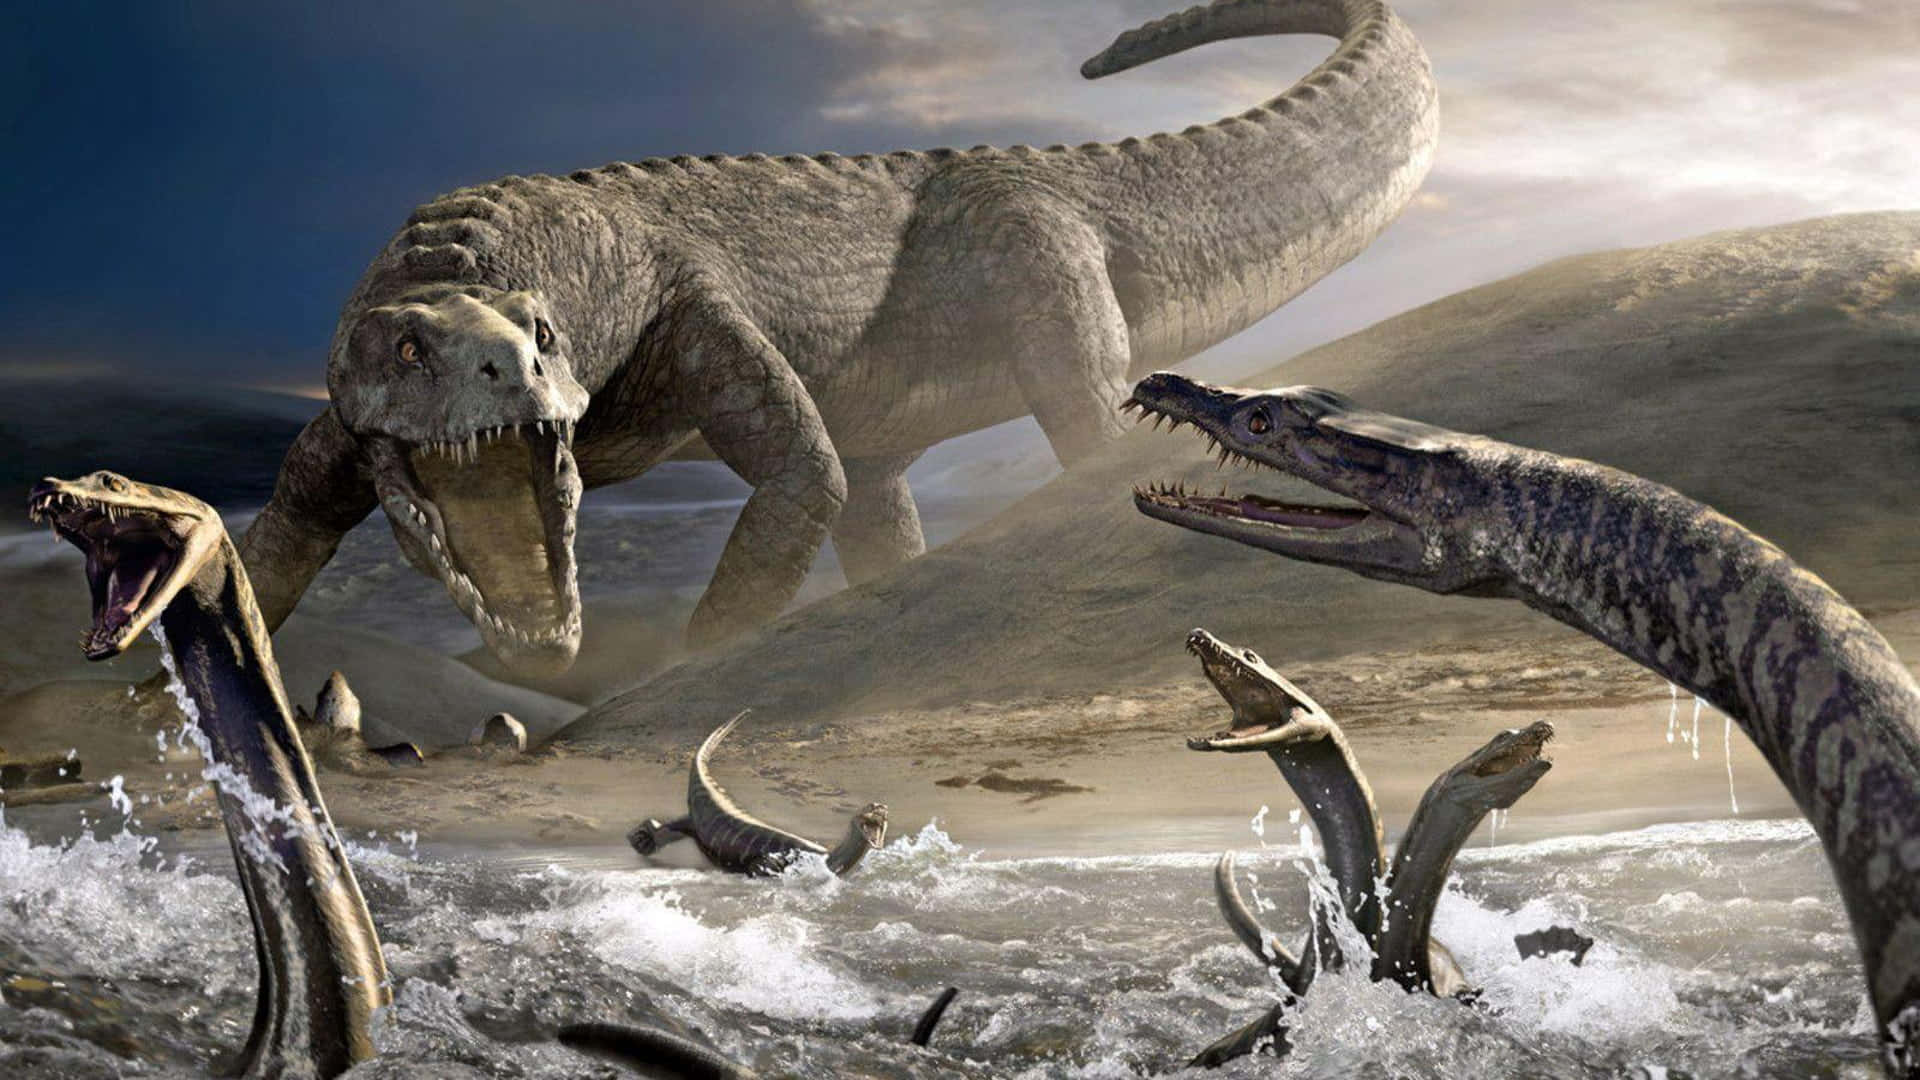 Dinosaurstriassic Jurassic Extinction Bild.